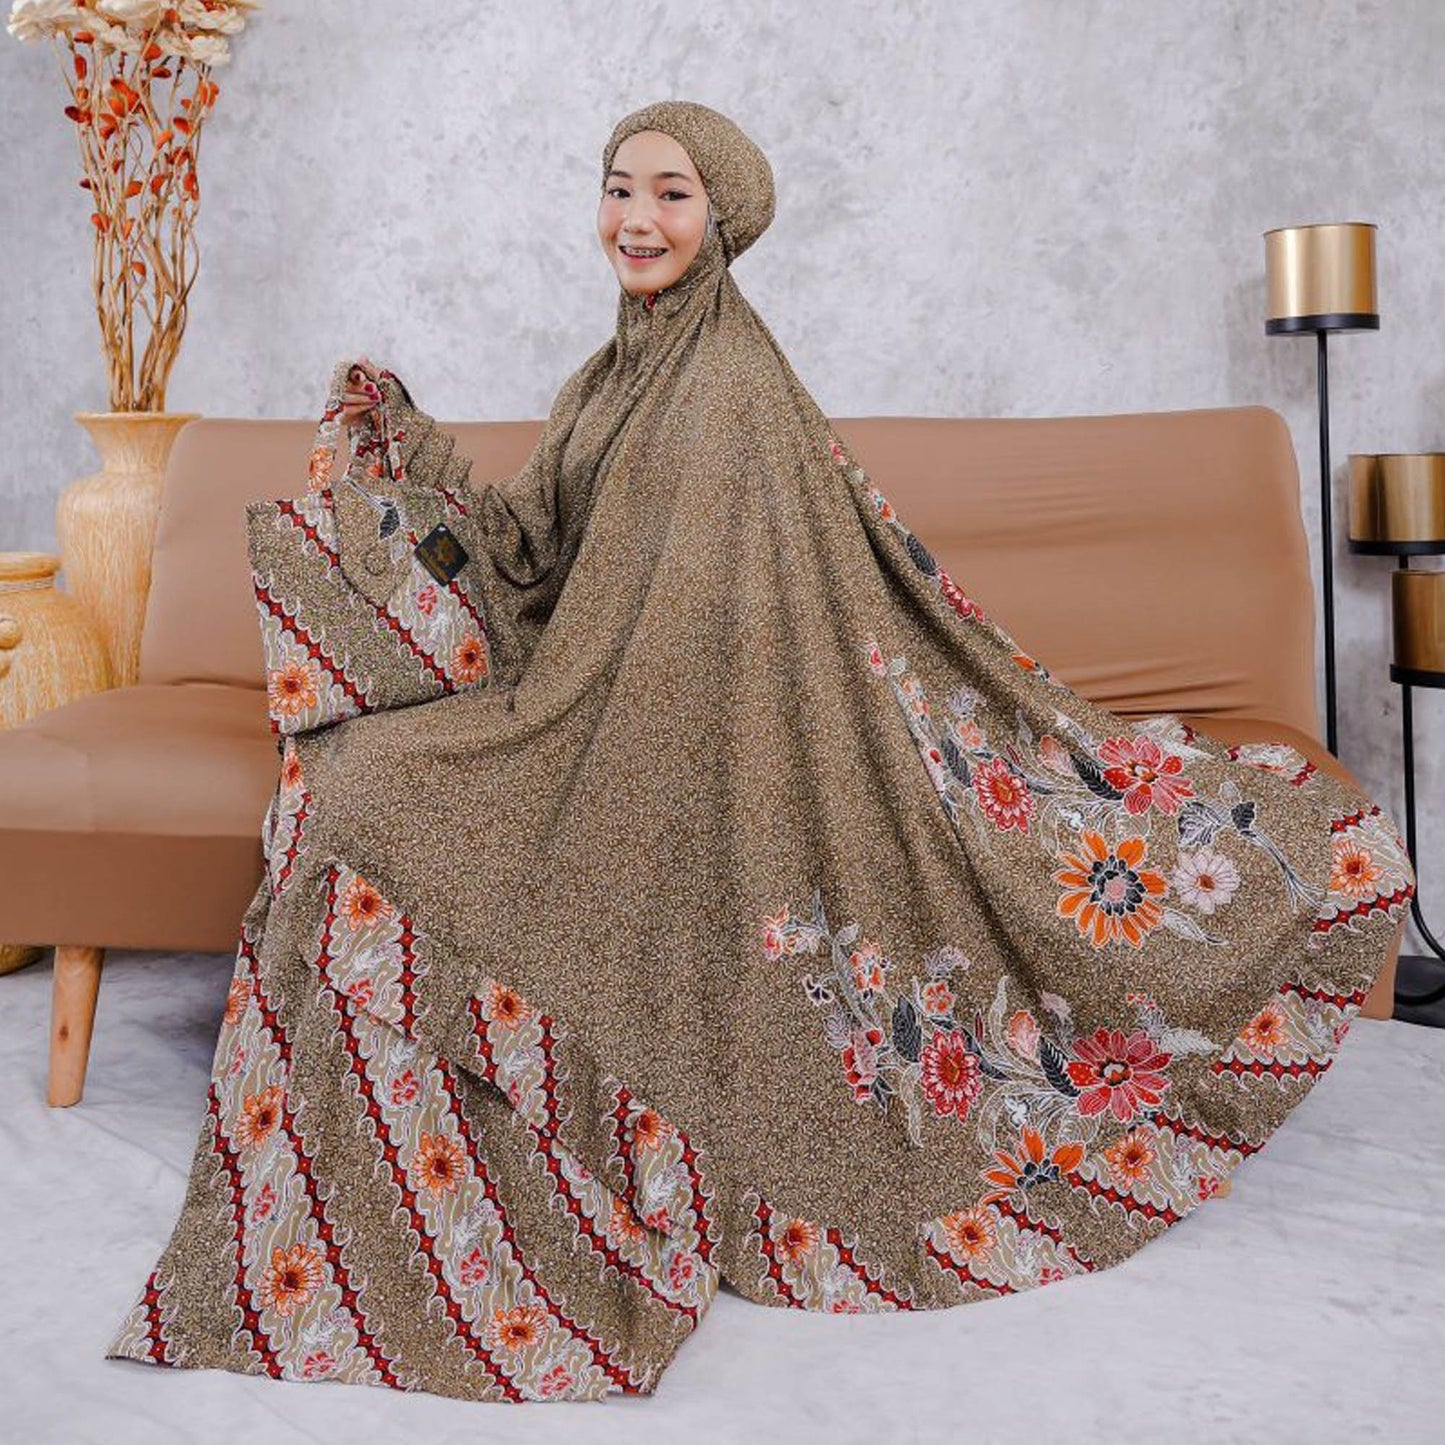 Comfortable and Elegant: Laksmi Batik Premium Rayon Mukena for Adults, Prayer dress women, Prayer Dress, Muslim prayer outfit, Player Set